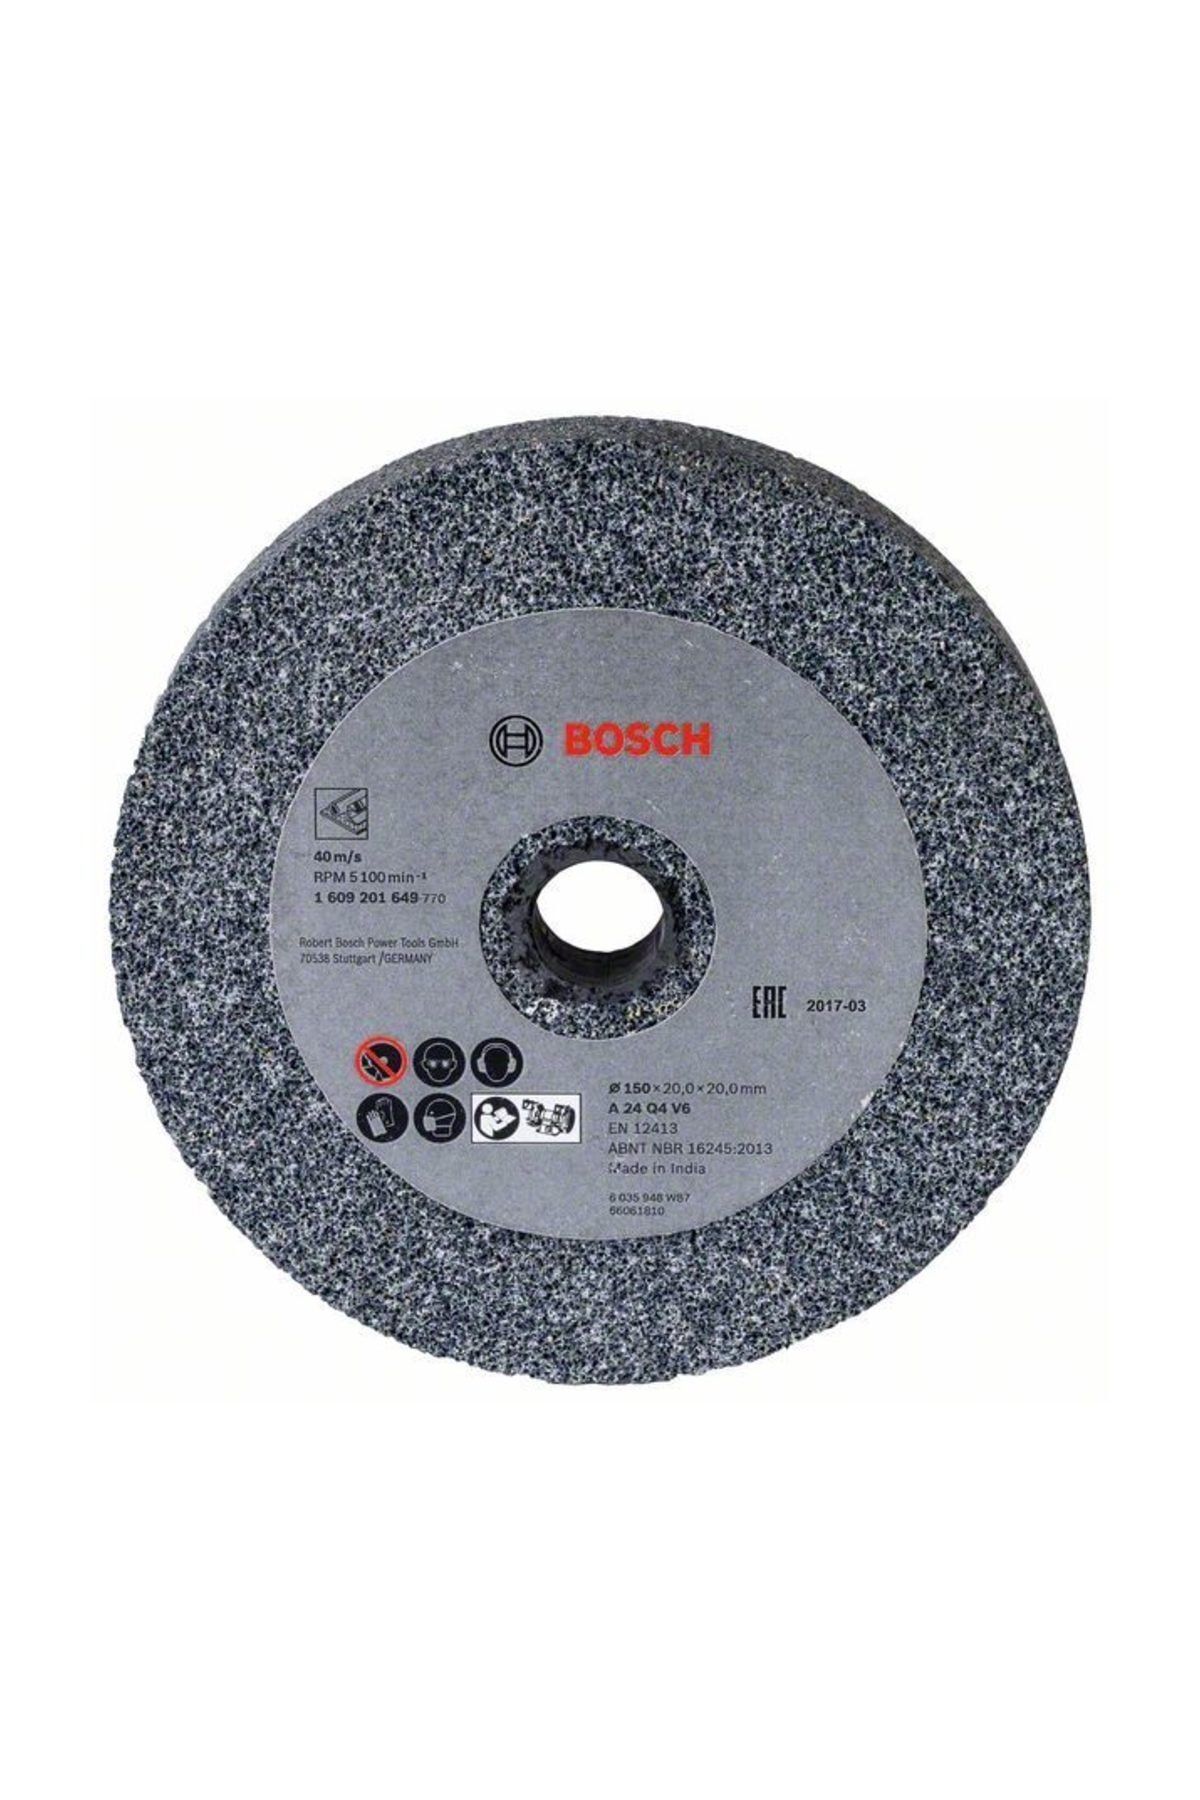 Bosch GBG 35-15 Taşlama Motoru Zımpara Diski